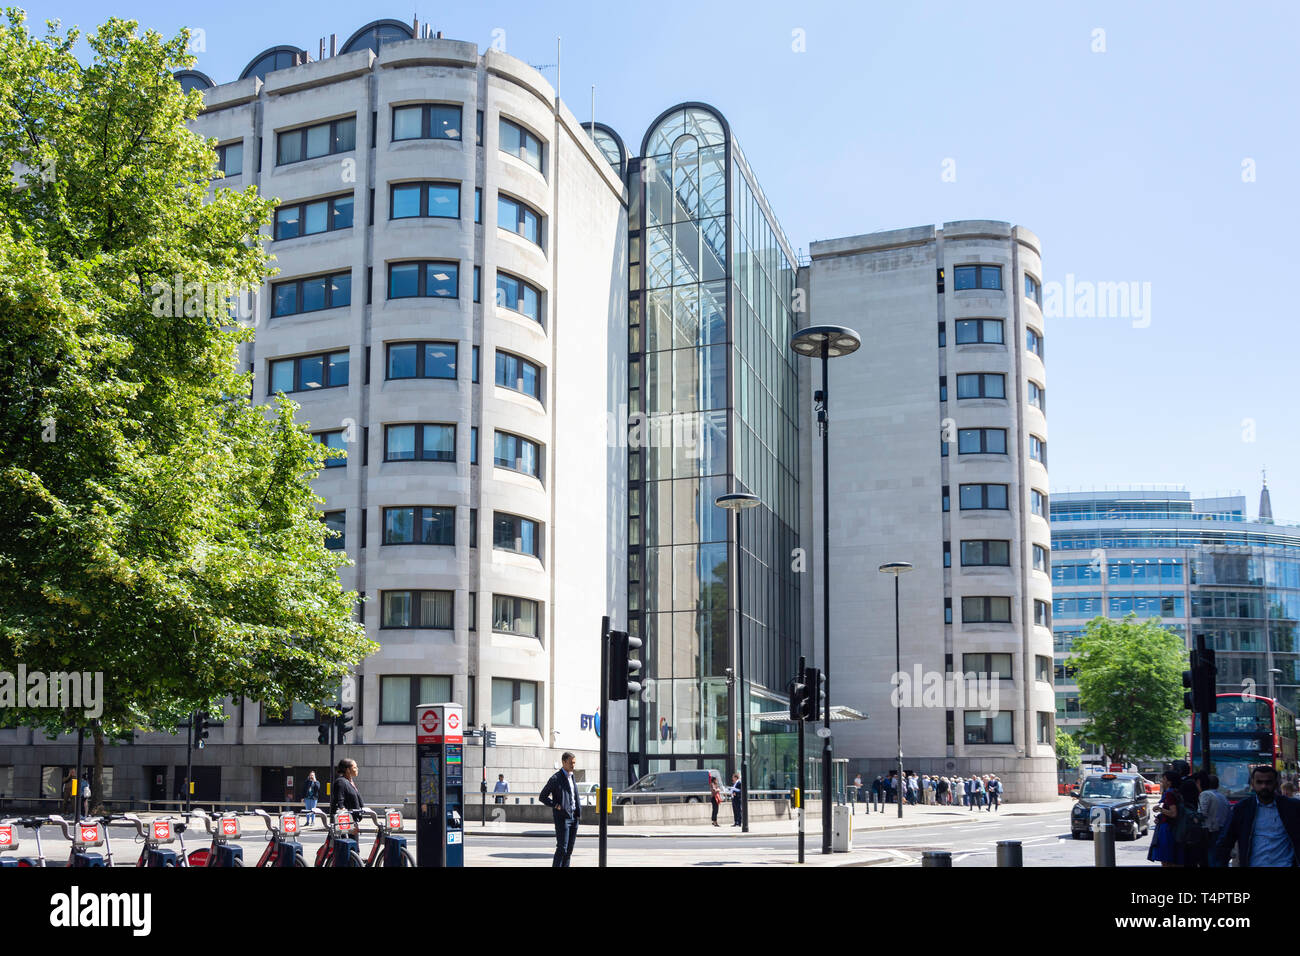 BT Centre (British Telecom) Building, Newgate Street, Ludgate Hill, City of London, Greater London, England, United Kingdom Stock Photo